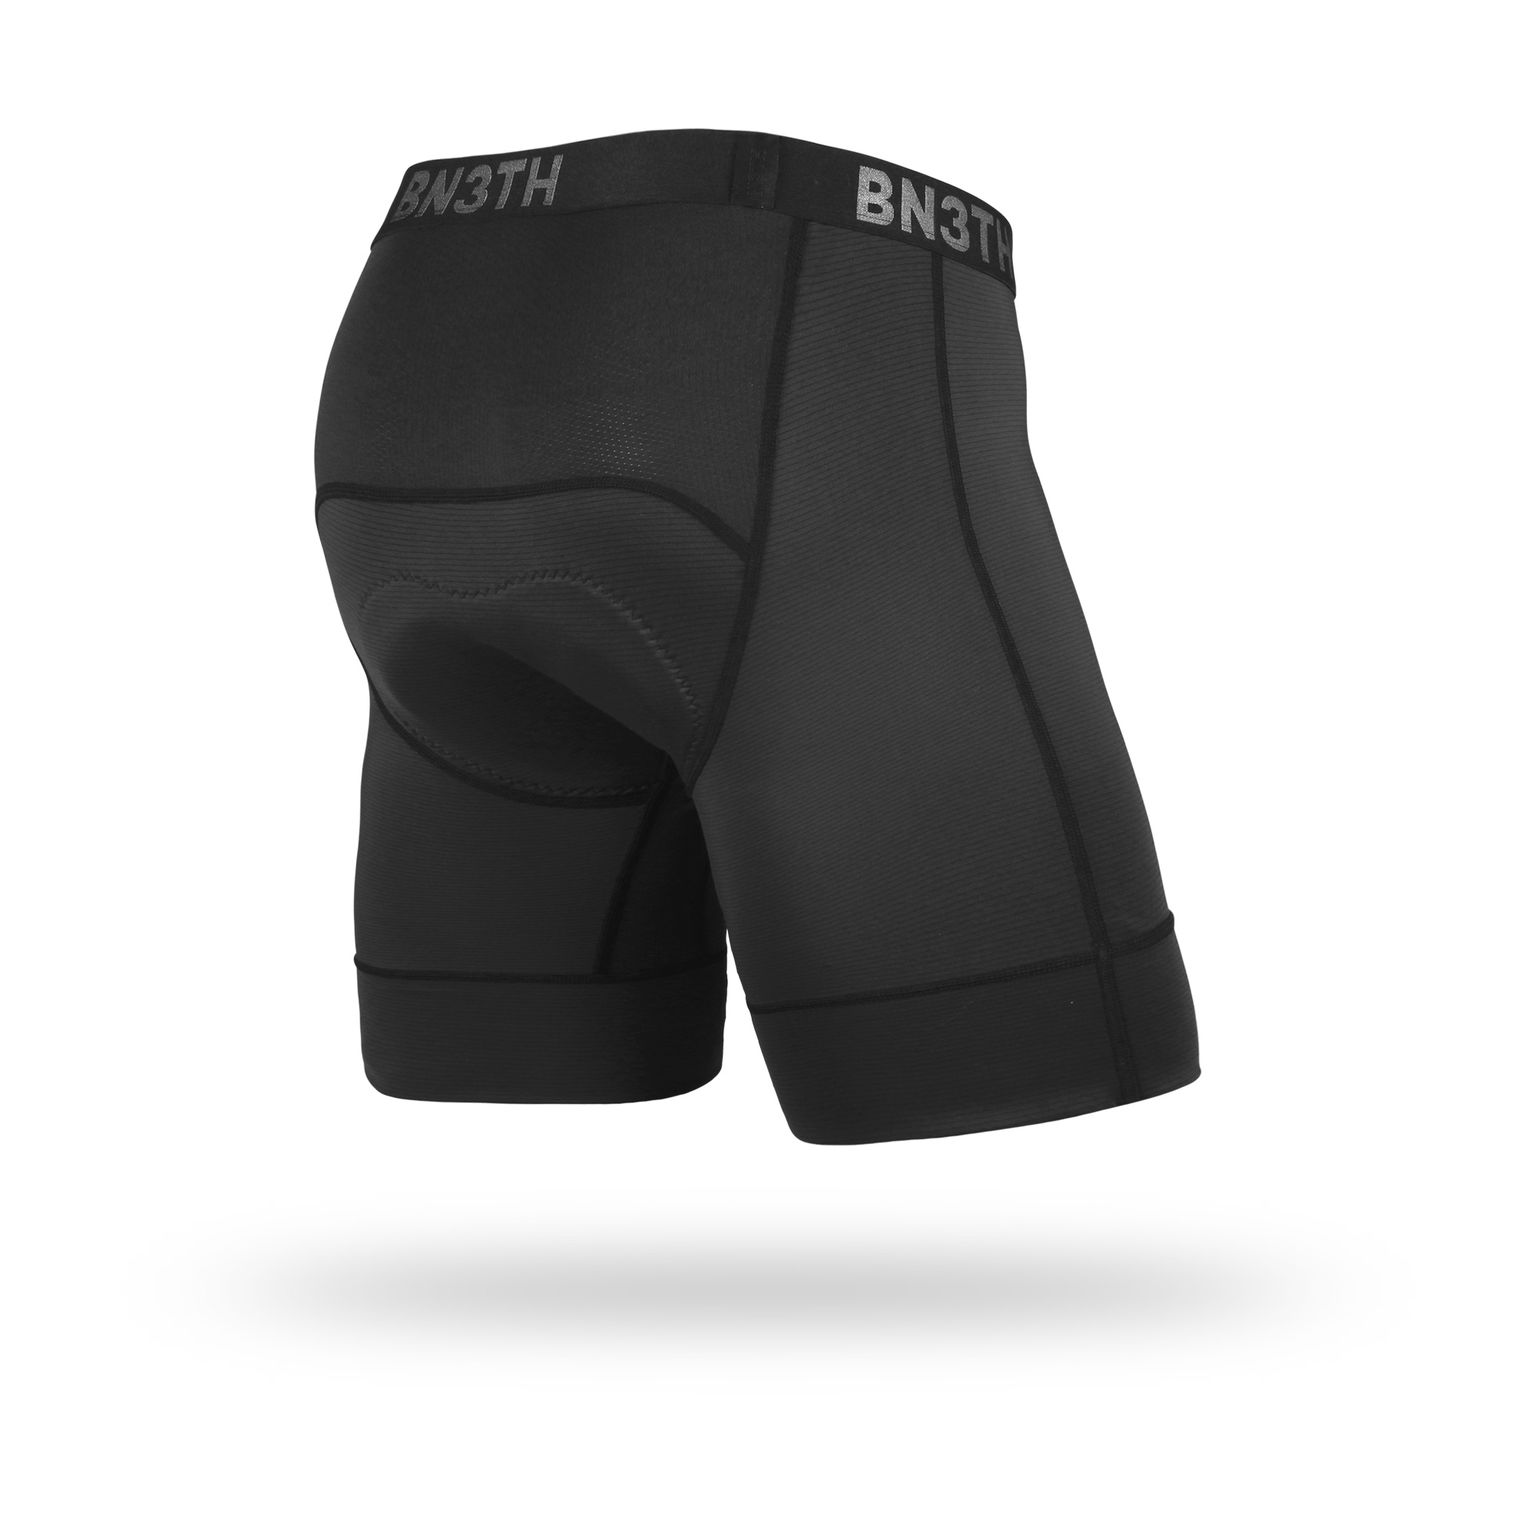 bn3th bike shorts